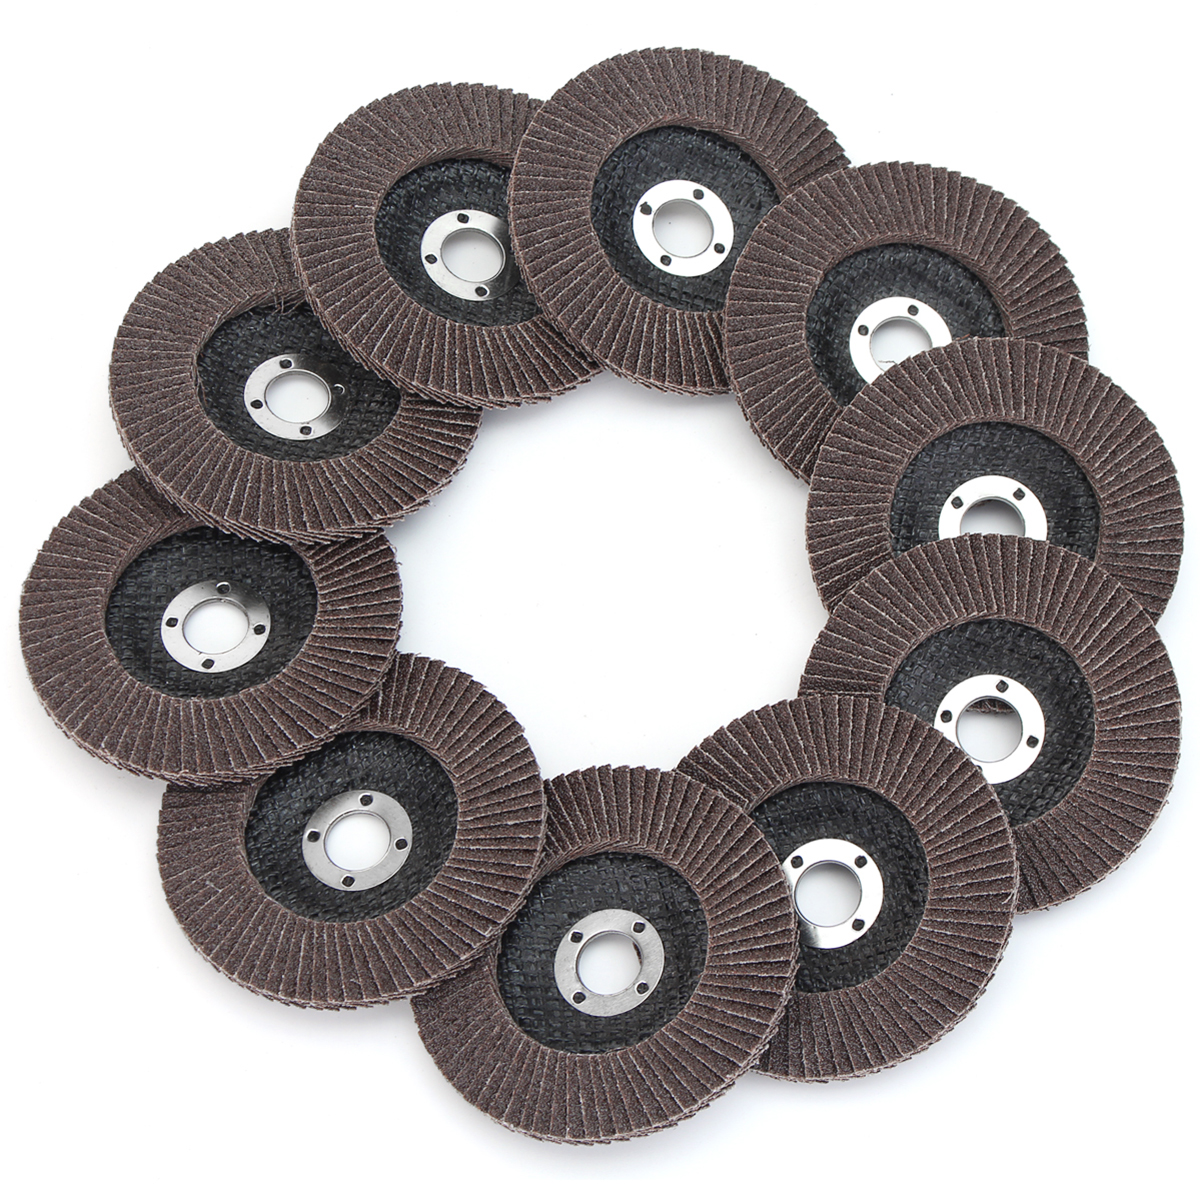 

10pcs 4 Inch 60/80 Grit Sanding Disc Aluminum Oxide Flap Disc Sanding Grinding Wheel